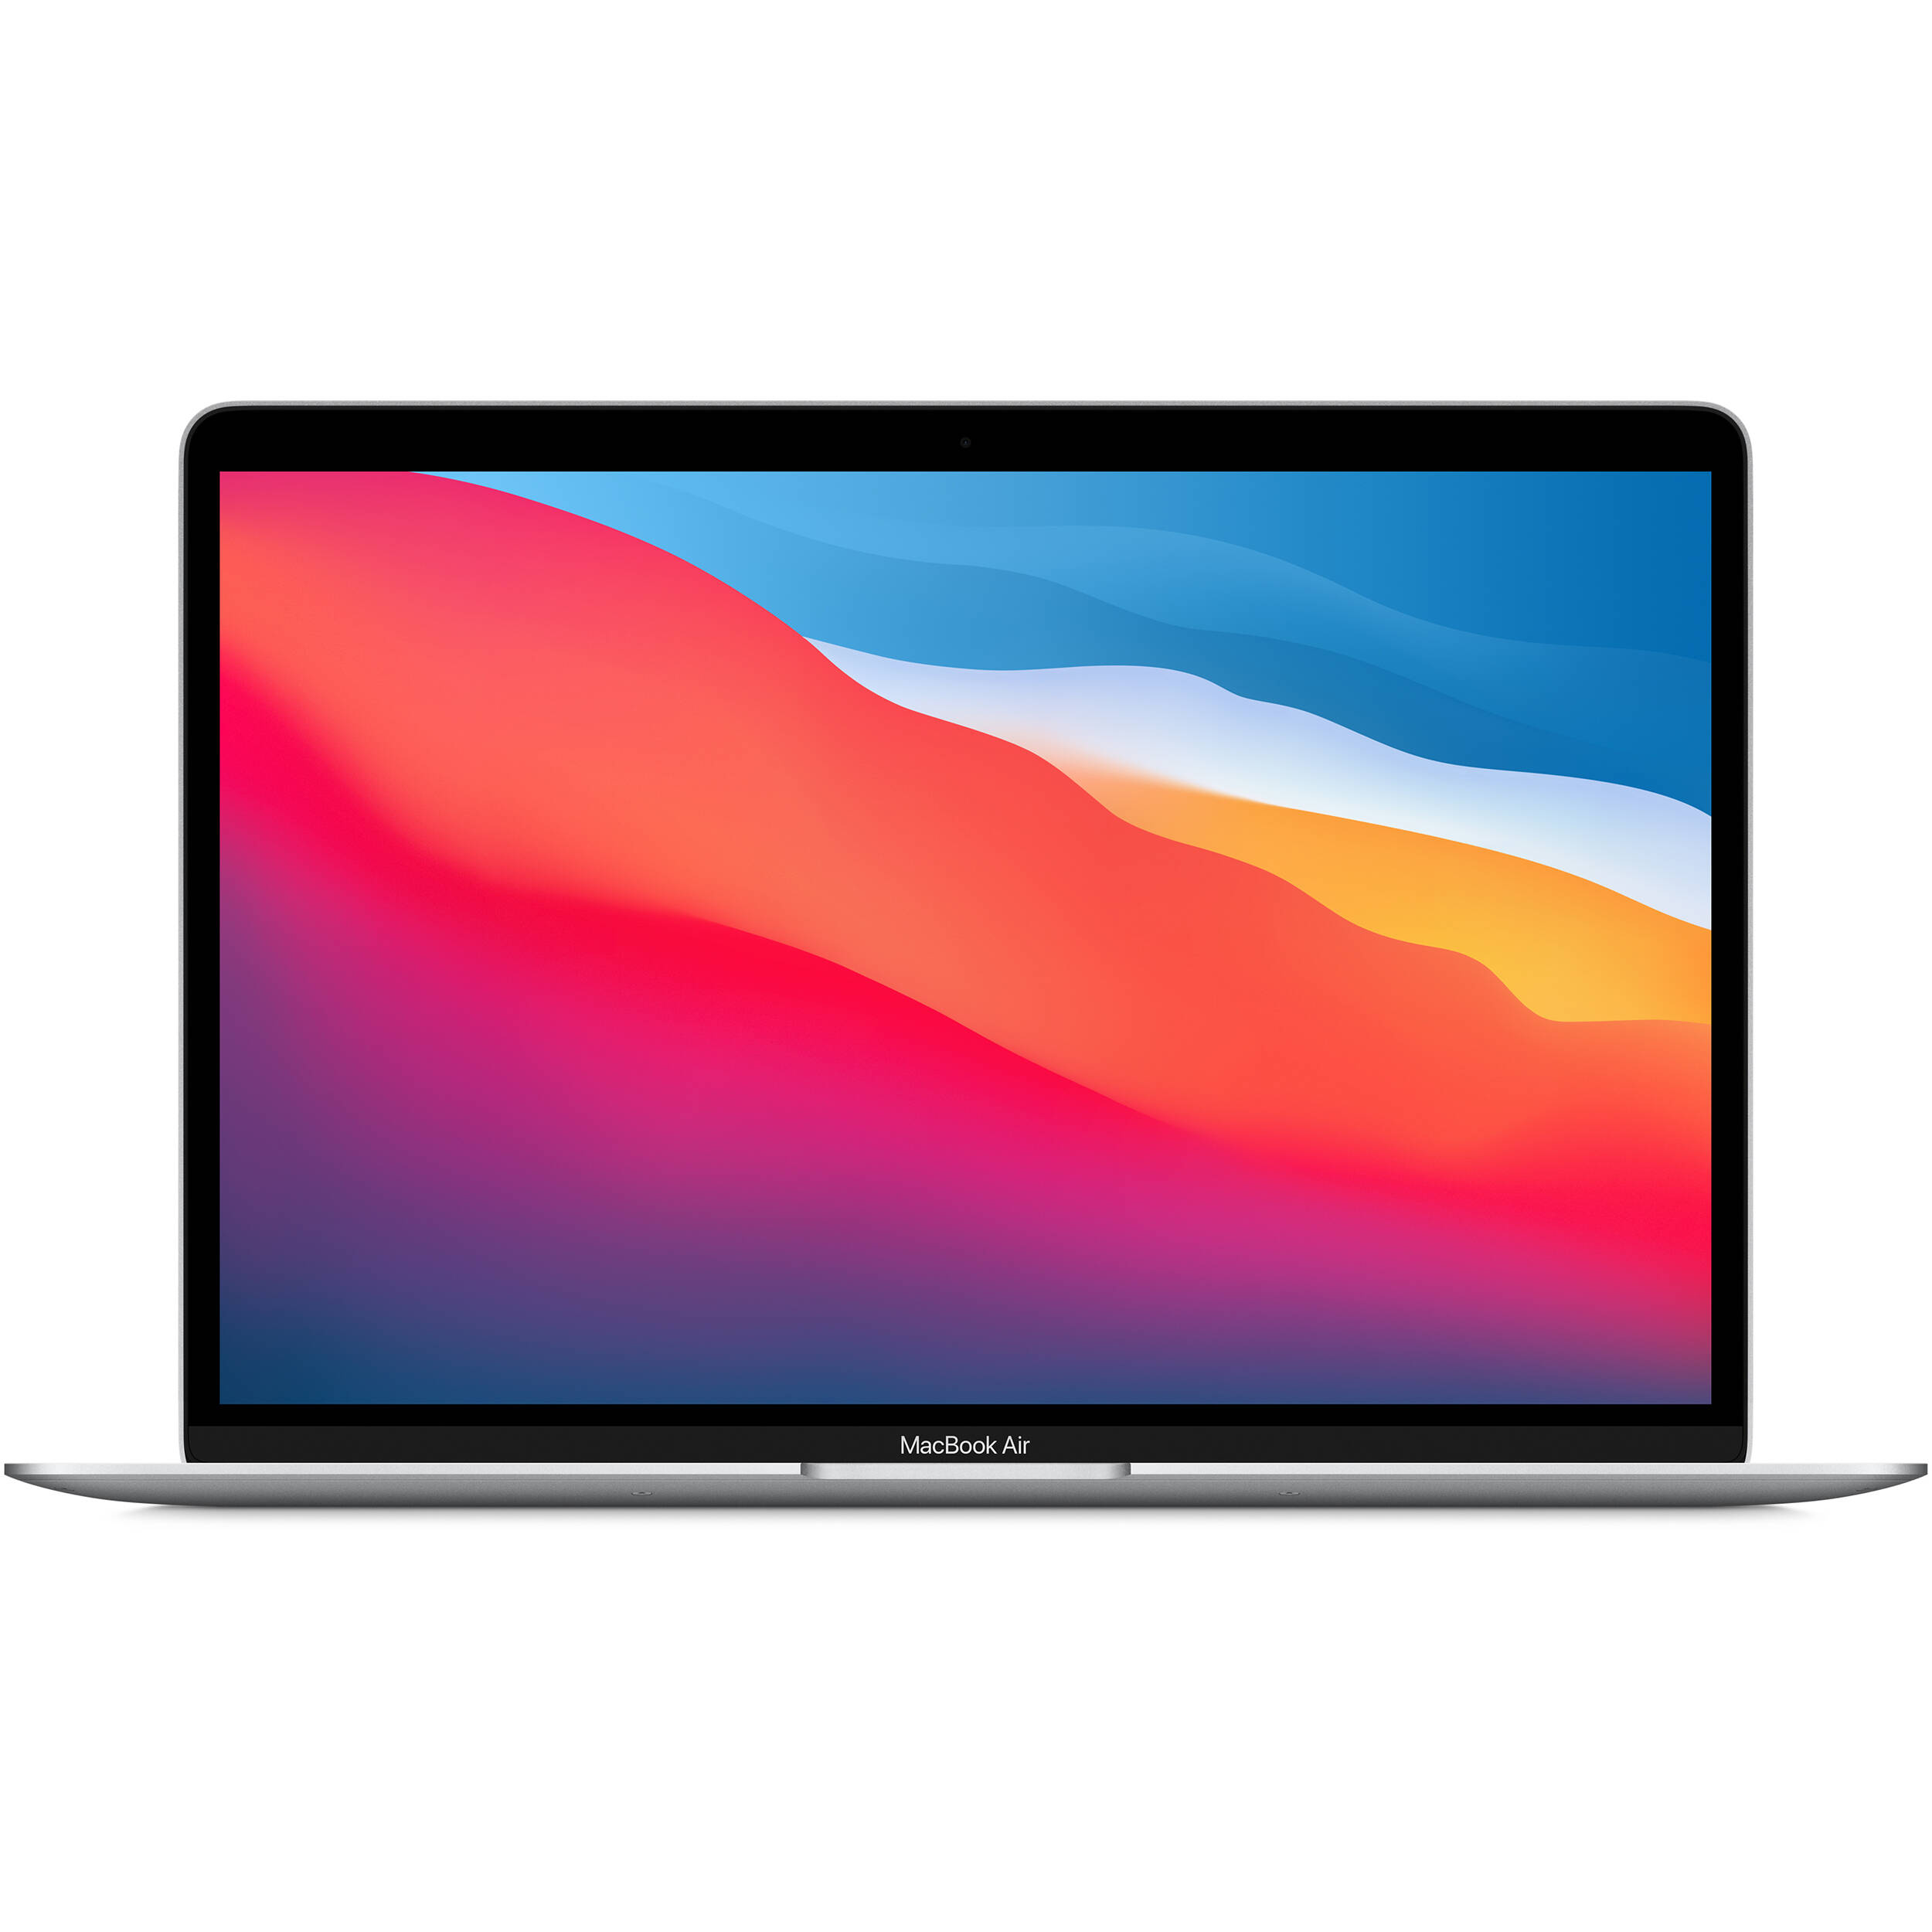 نکته خرید - قیمت روز لپ تاپ 13 اینچی اپل مدل MacBook Air MGN93 2020 خرید